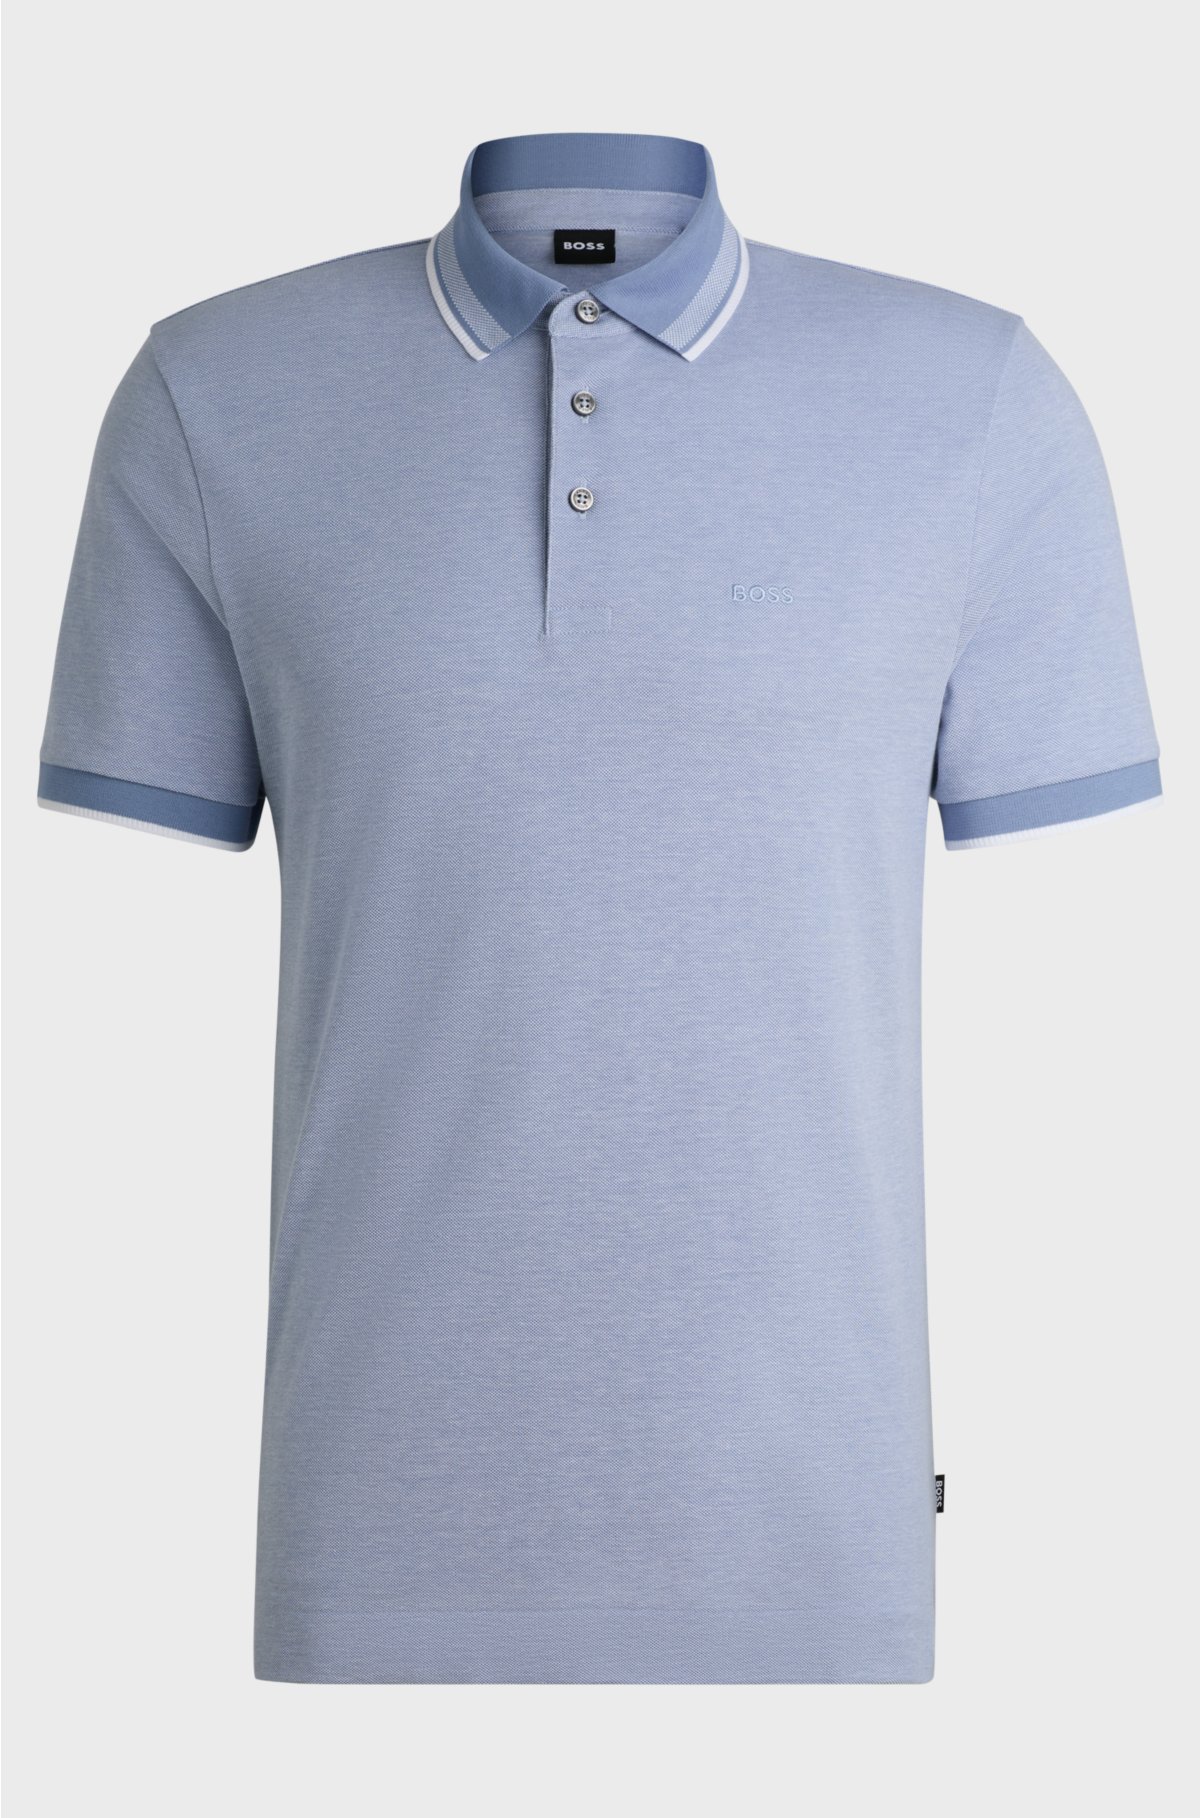 Oxford-cotton-piqué polo shirt with logo detail, Light Blue